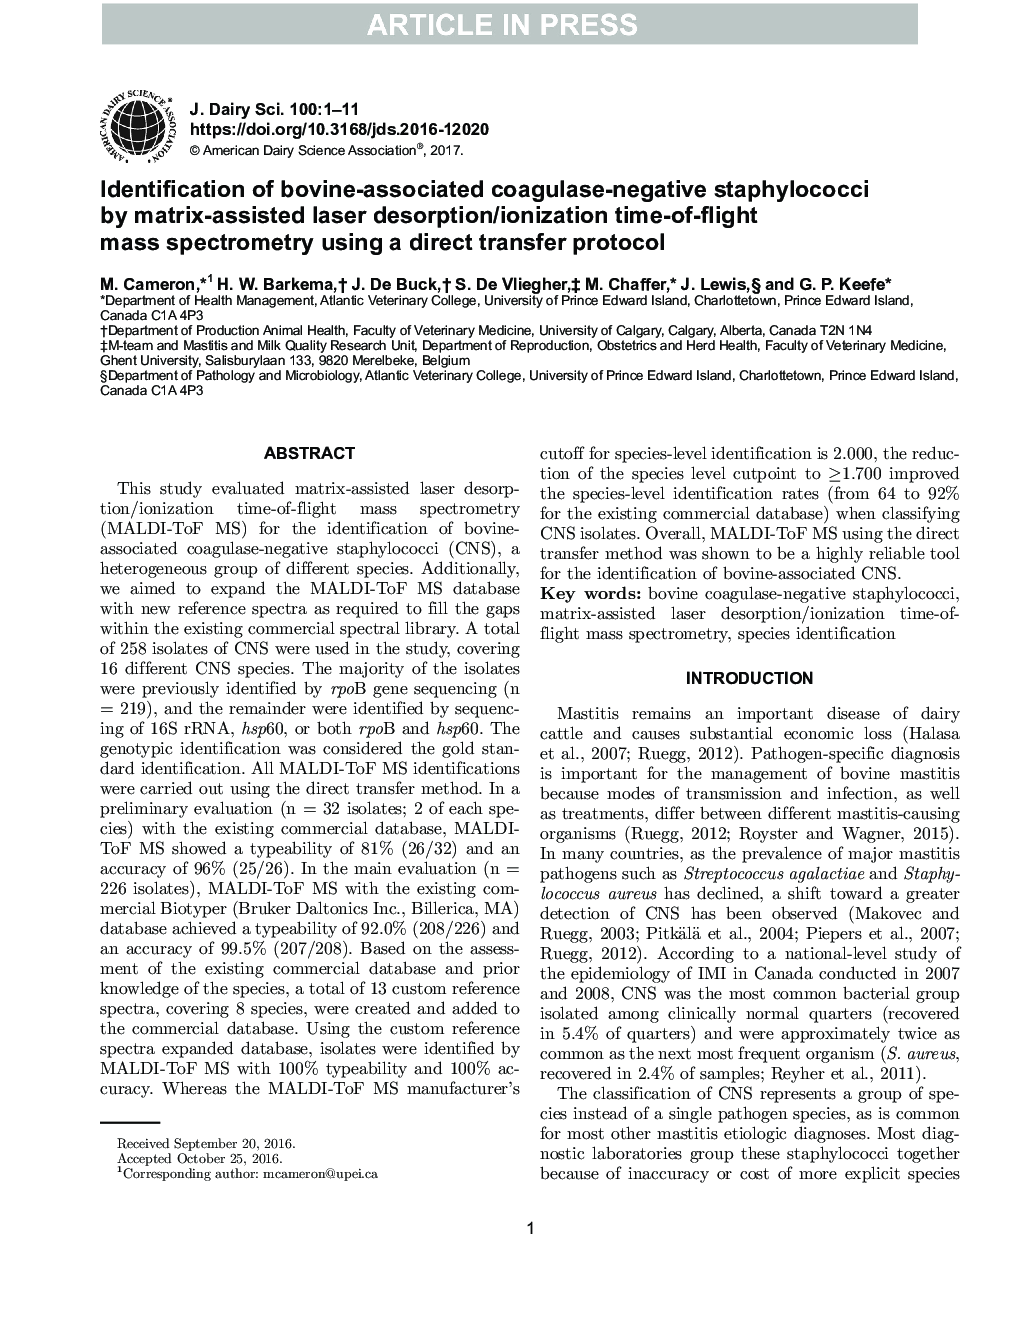 Identification of bovine-associated coagulase-negative staphylococci by matrix-assisted laser desorption/ionization time-of-flight mass spectrometry using a direct transfer protocol